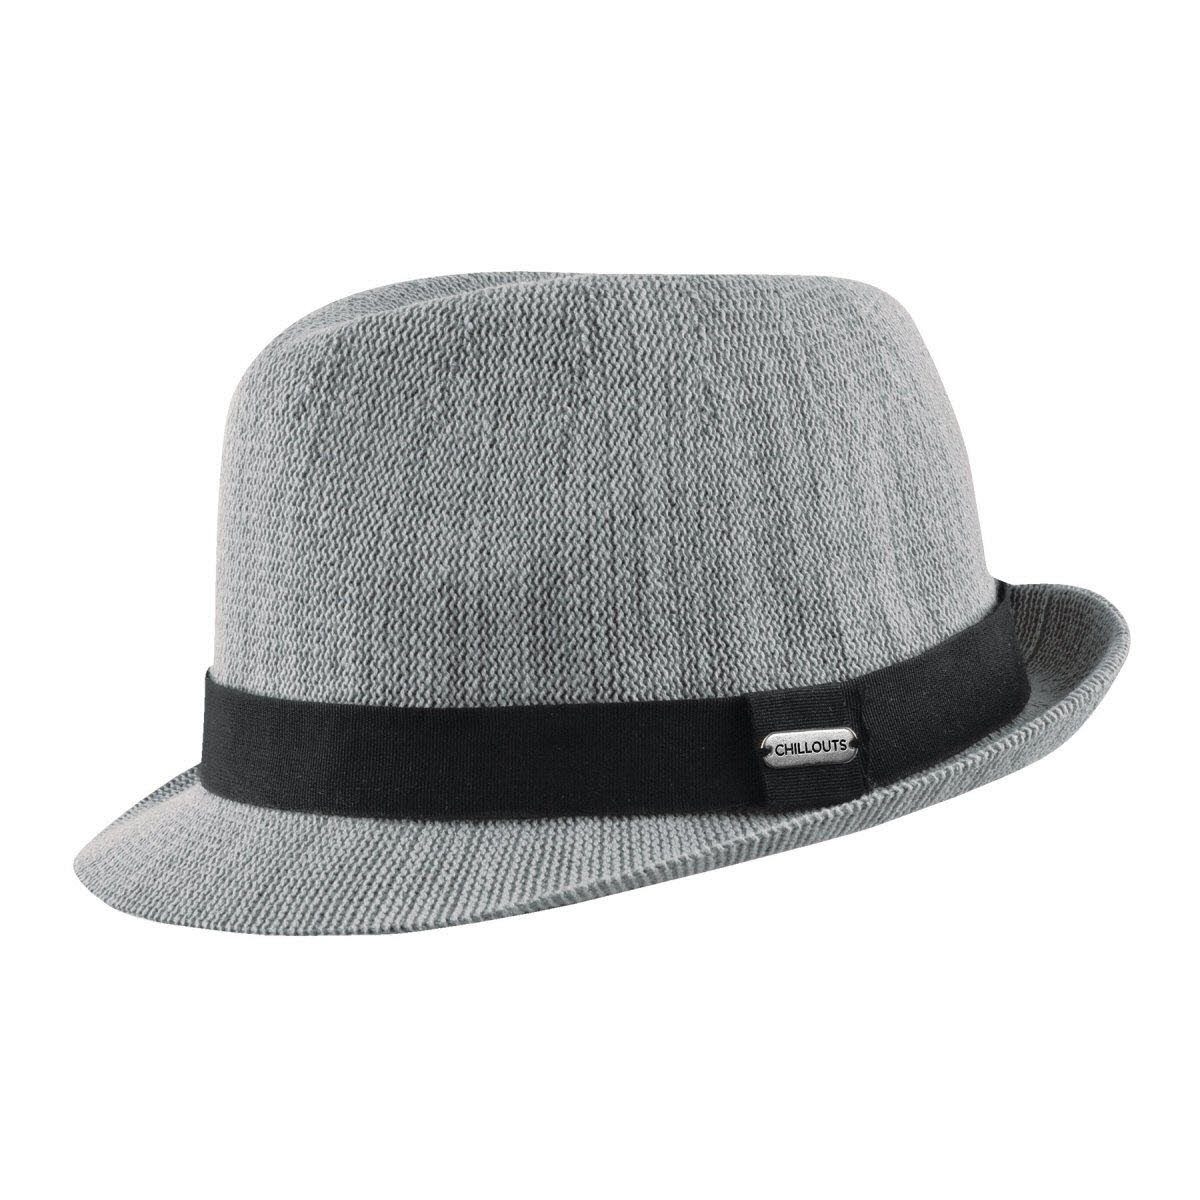 Beanie chillouts Hat 21-grey Bardolino